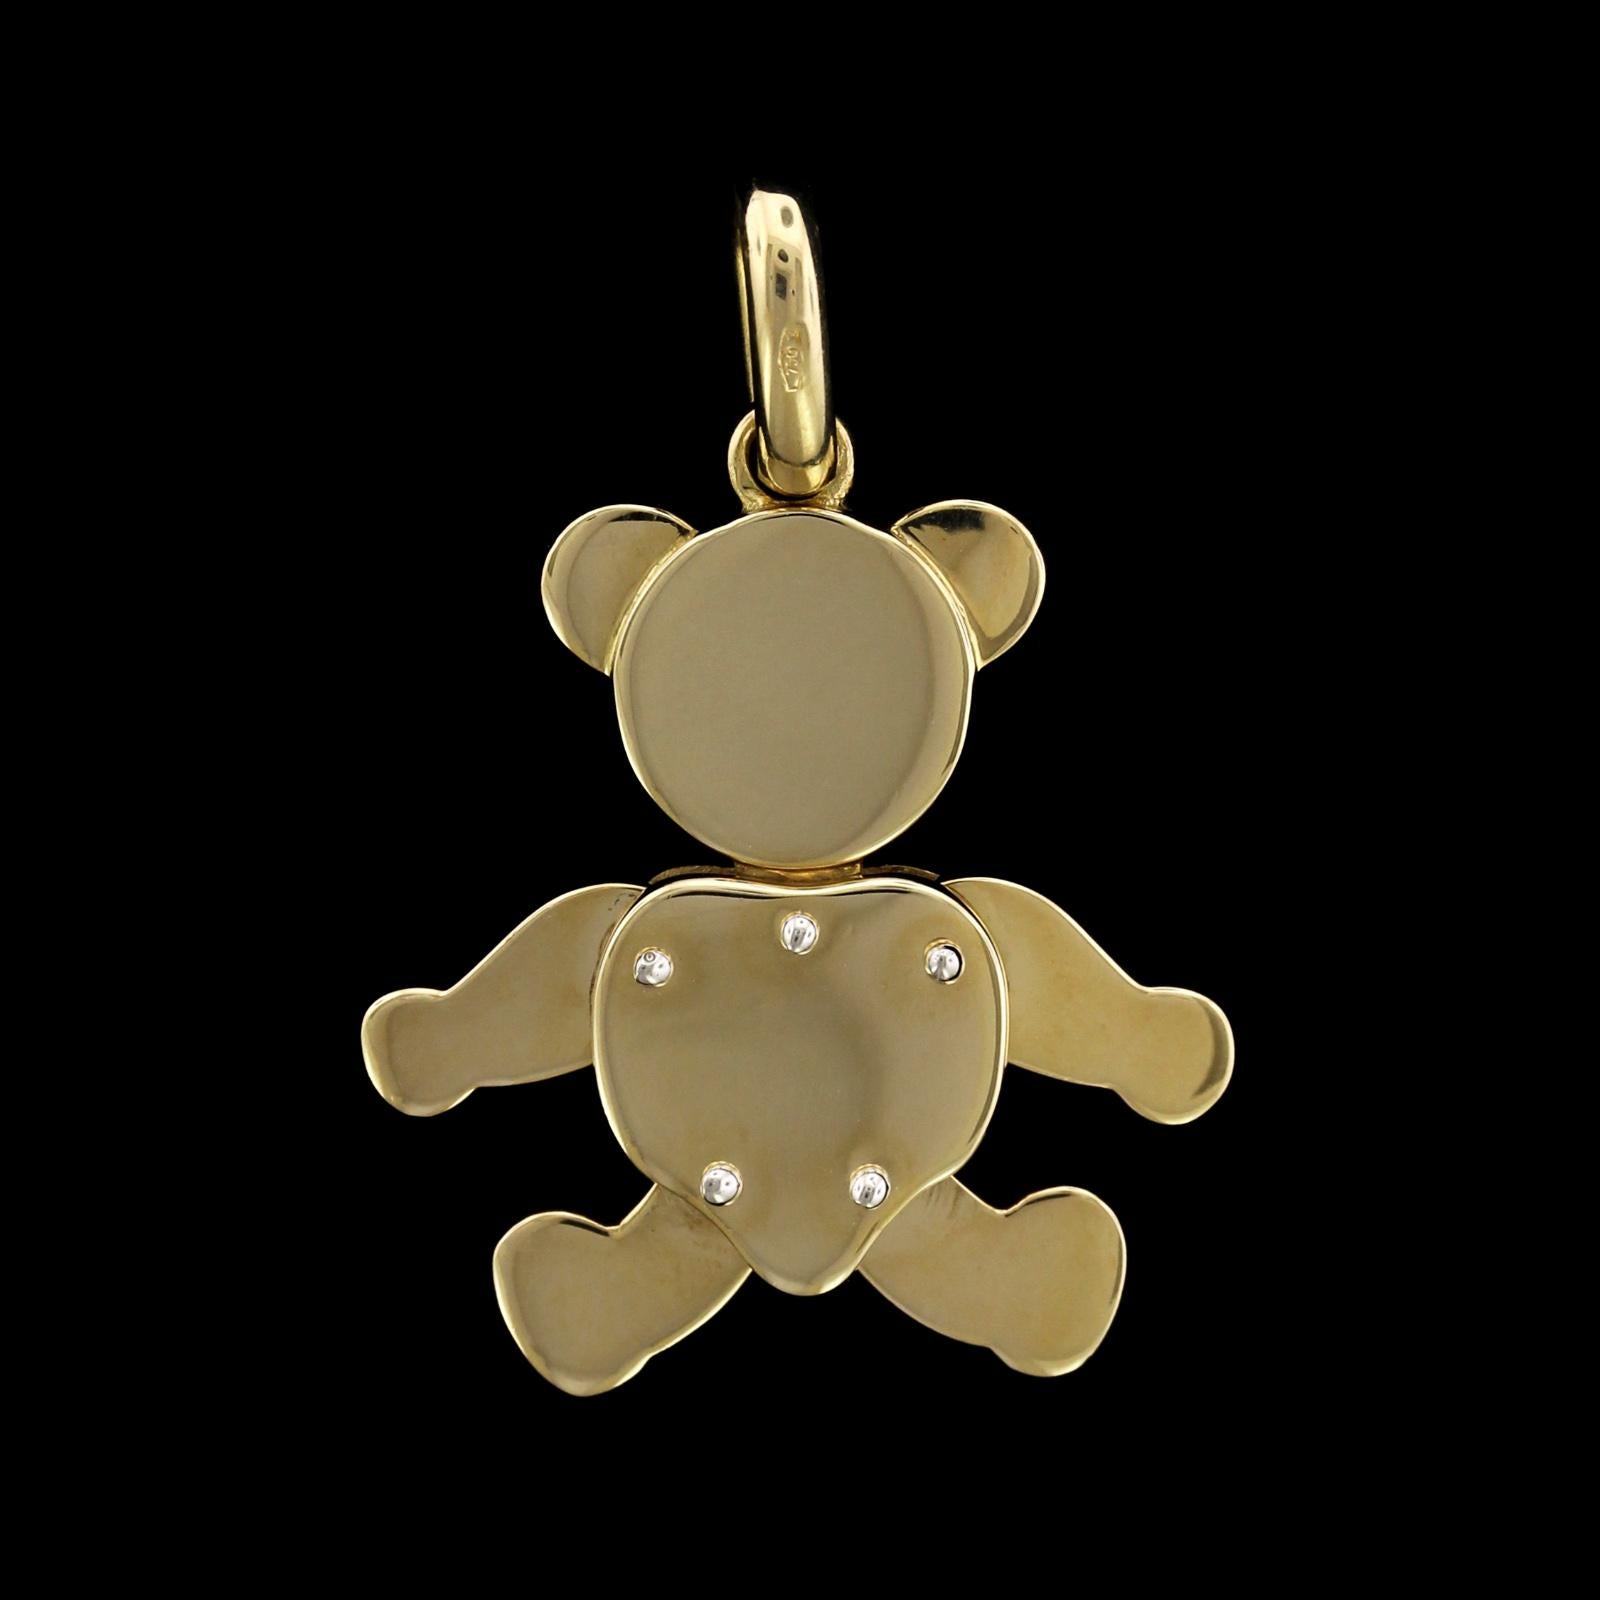 Pomellato 18K Yellow Gold Teddy Bear Charm. The bear is designed as a movable charm, length
1 1/2